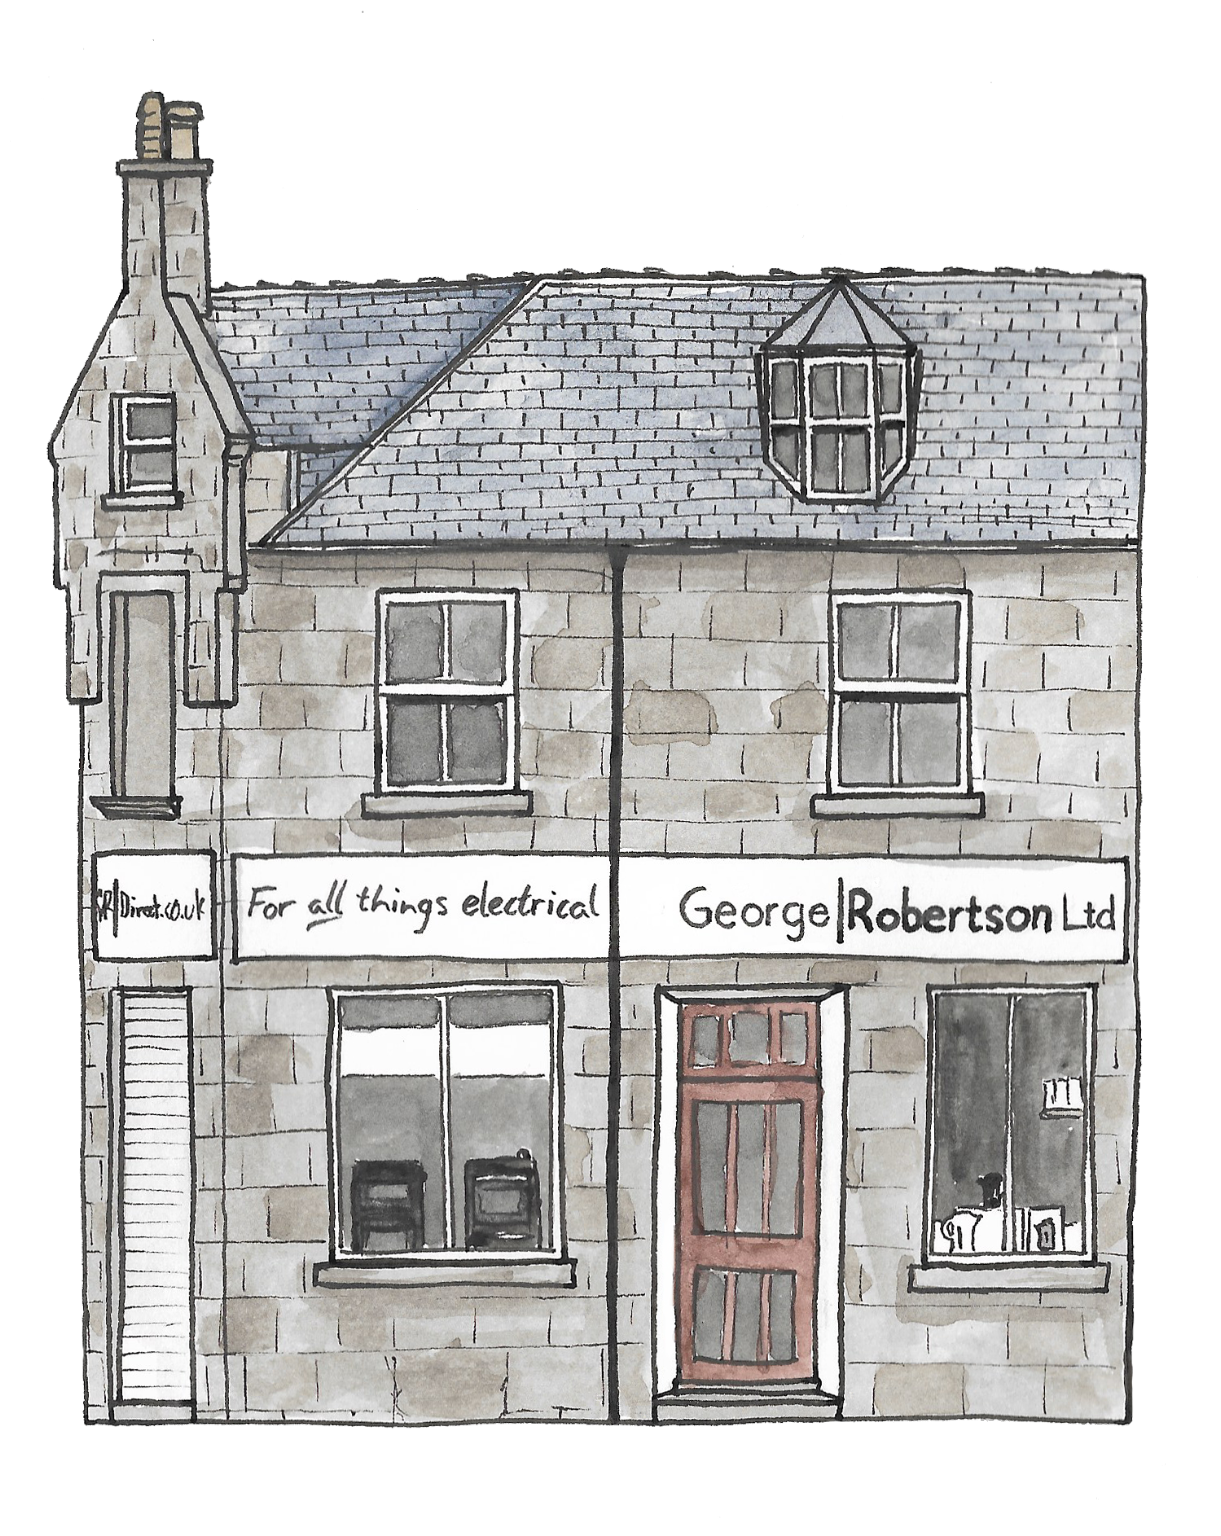 George Robertson Ltd